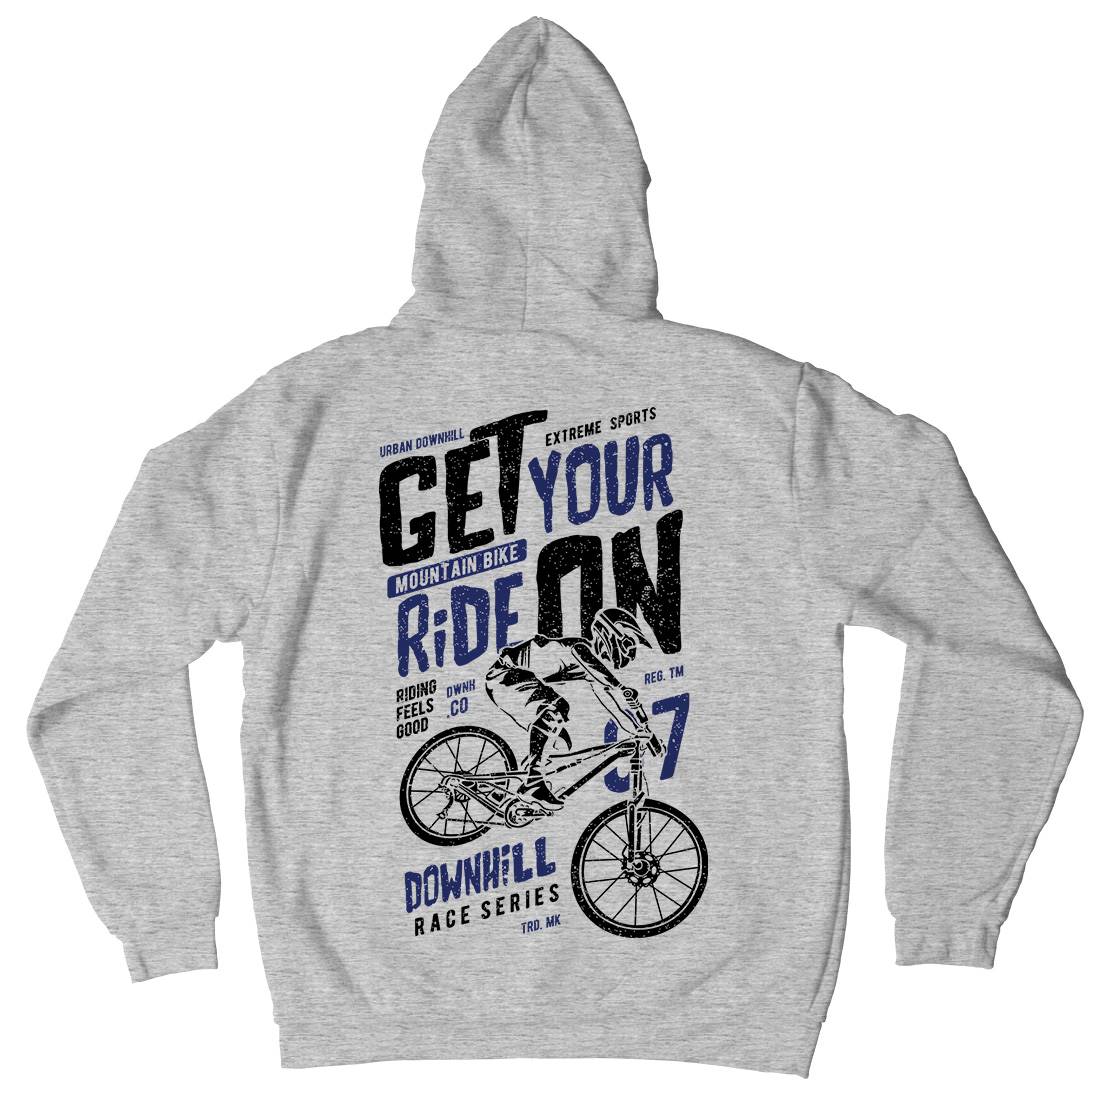 Get Your Ride Kids Crew Neck Hoodie Bikes A673